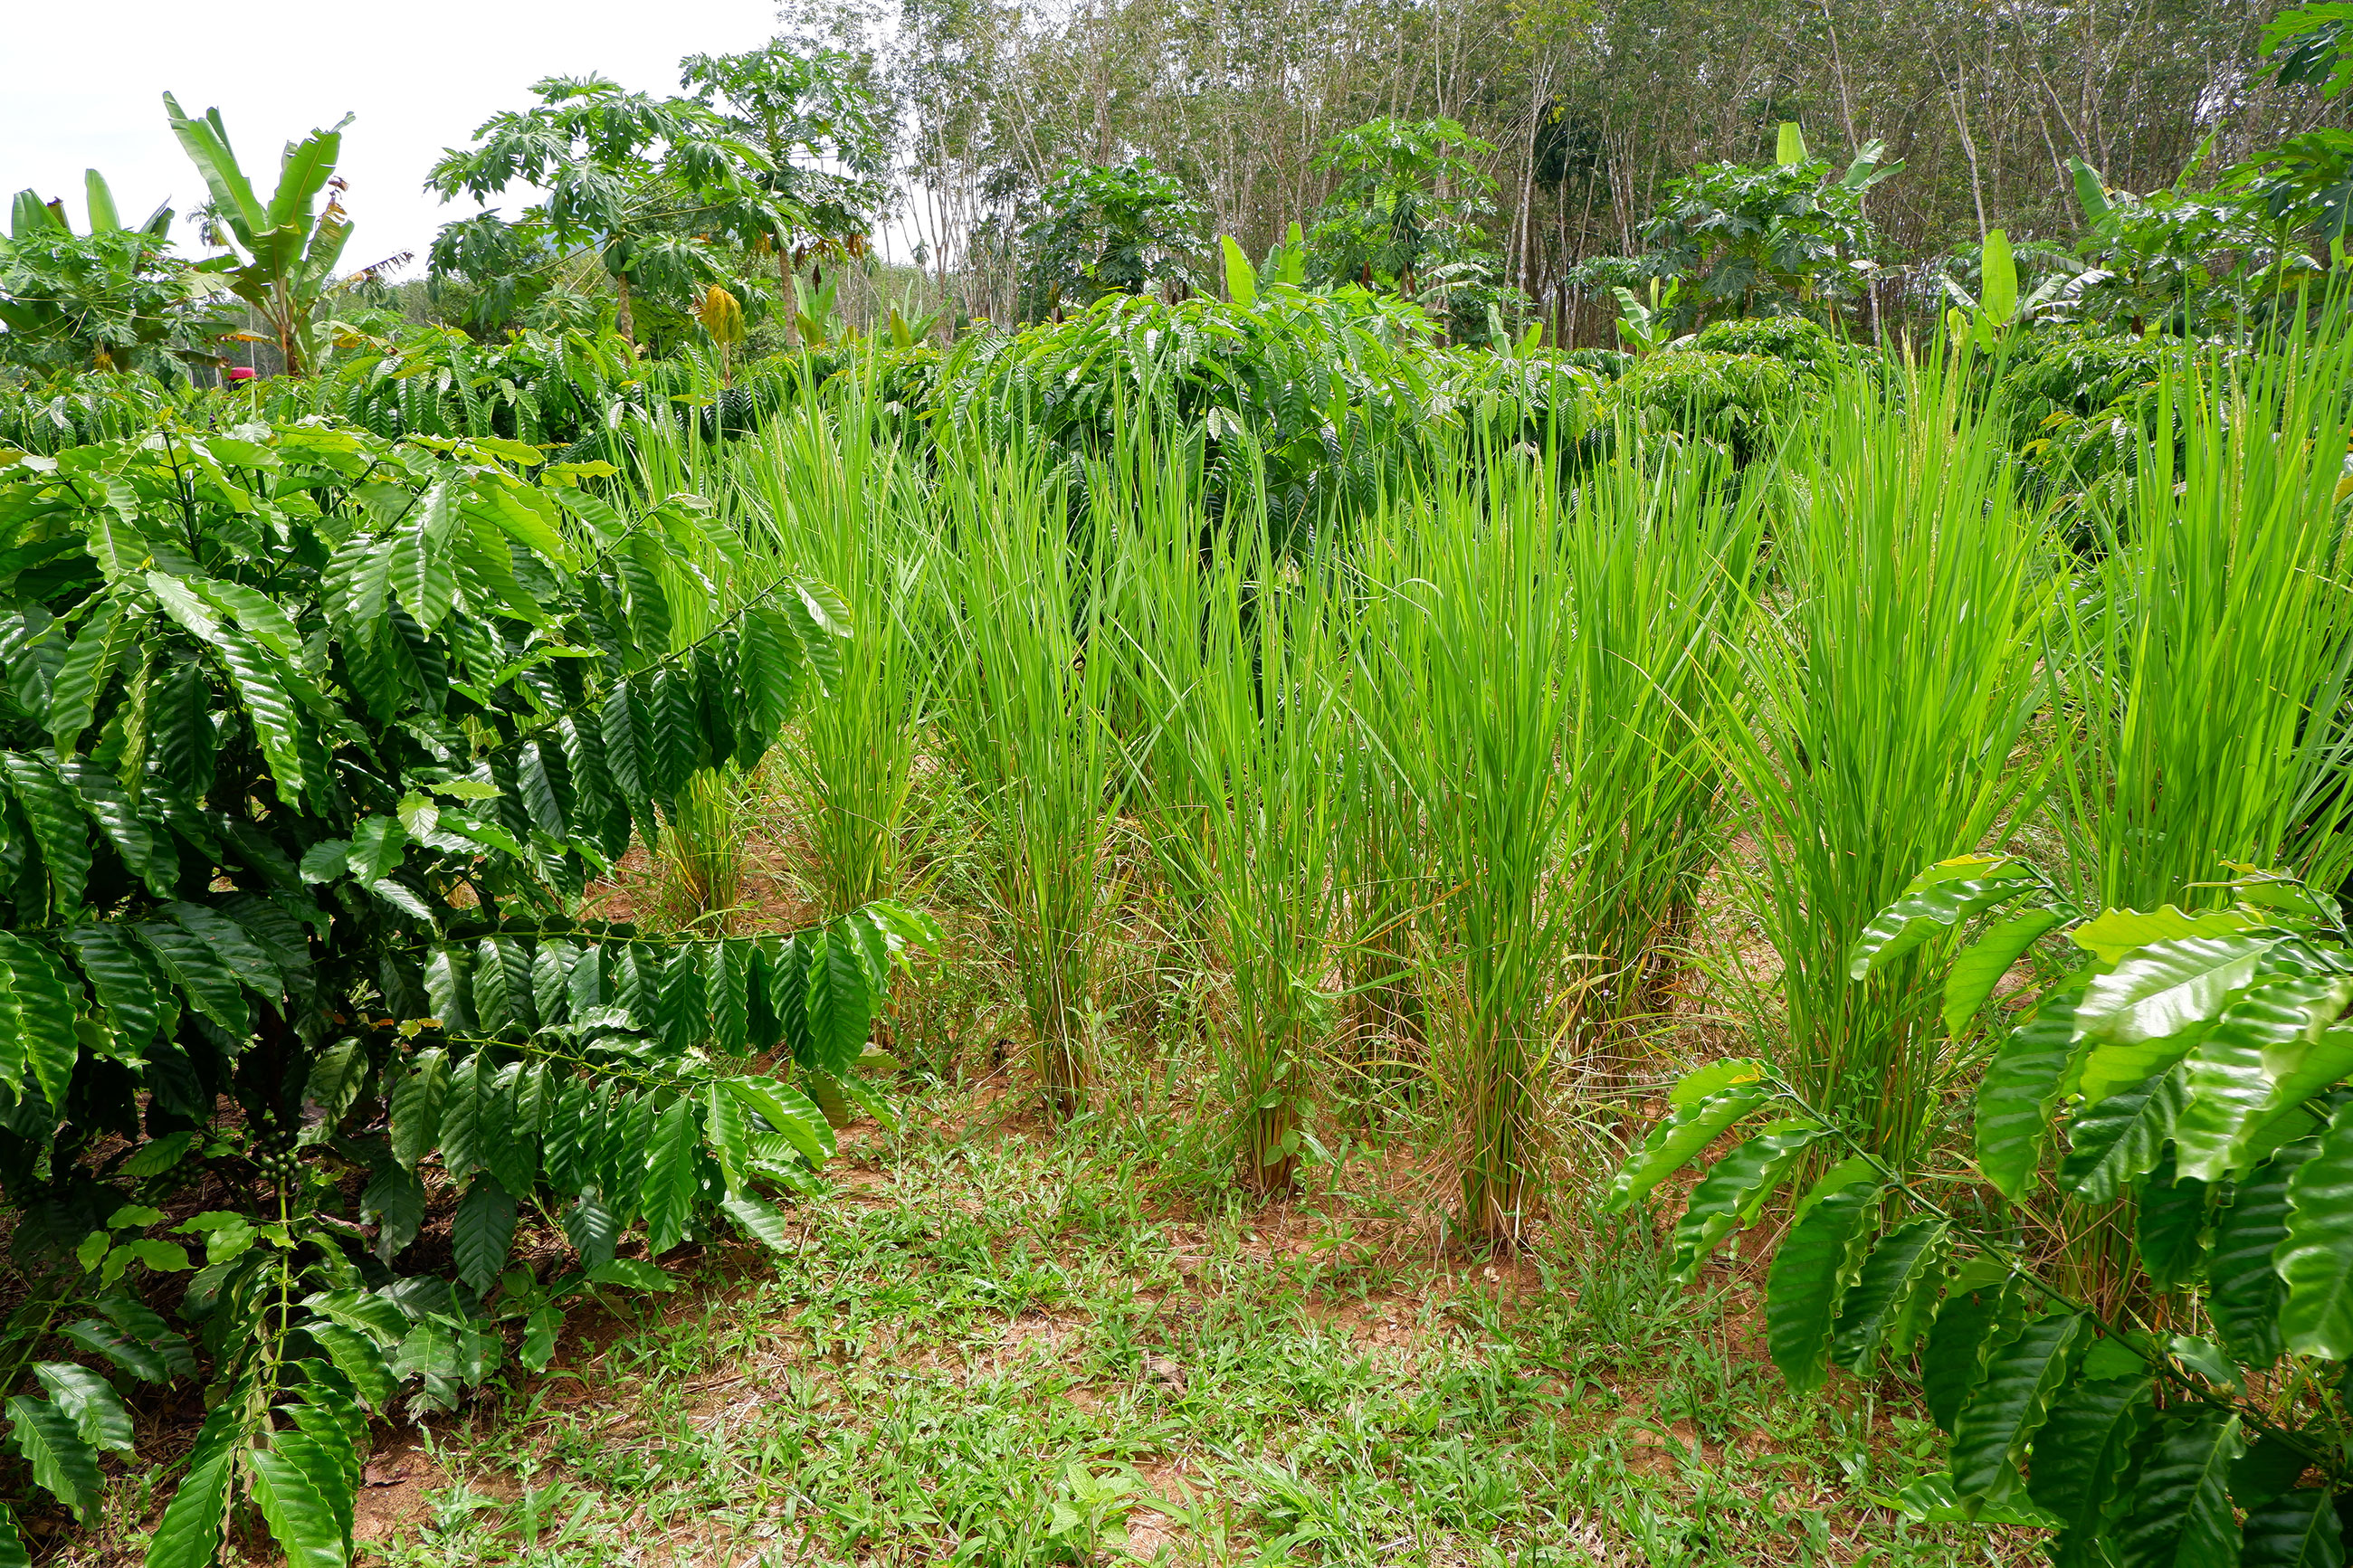 The demonstration plot of Ms. Kan Raksanit at Chai Rat, Bang Saphan Noi District, Prachuap Khiri Khan province, that grows Robusta coffee with upland rice, banana, papaya, and other cash crops (แปลงสาธิตของคุณก้าน รักสนิท ที่ ต.ไชยราช อ.บางสะพานน้อย จ.ประจวบคีรีขันธ์ ที่มีการปลูกพืชกาแฟโรบัสต้าร่วมกับพืชชนิดอื่น เช่น ข้าวไร่ กล้วย มะละกอ)